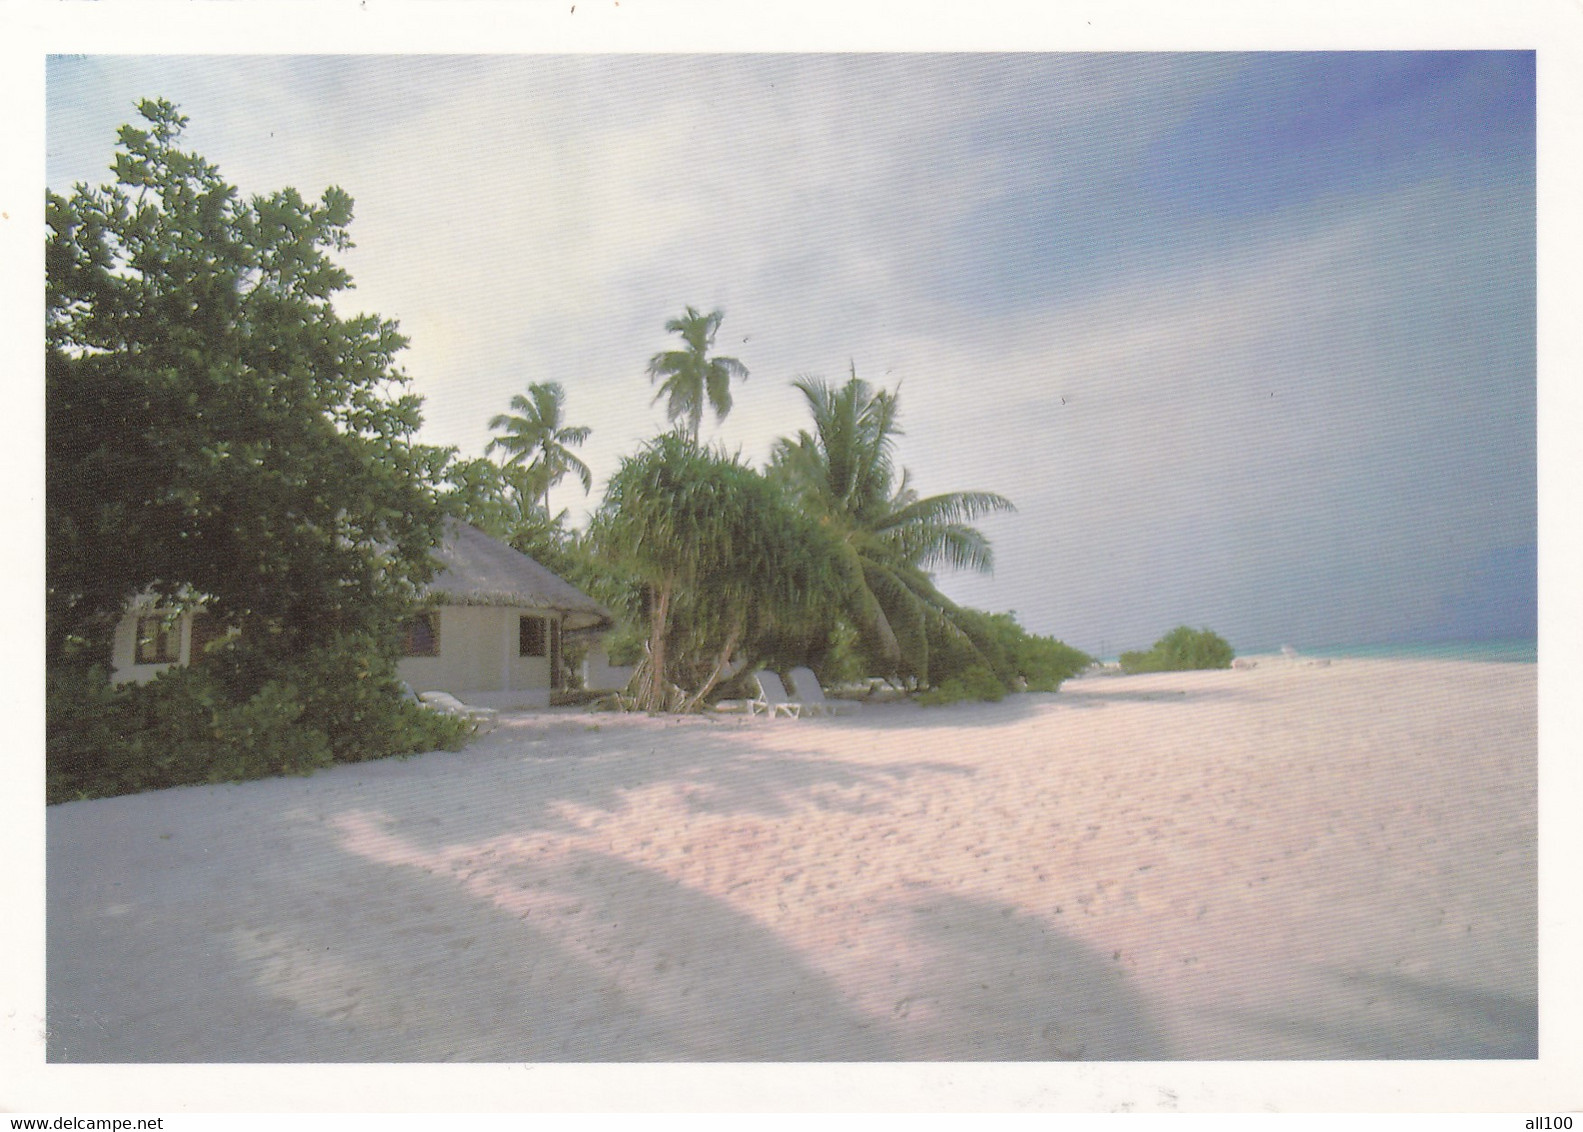 A20579 - MALDIVES VELAVARU ISLAND POST CARD USED STAMP MALDIVES ROSA MULTIFLORA SENT TO SWITZERLAND BEACH PALM TREES - Maldives